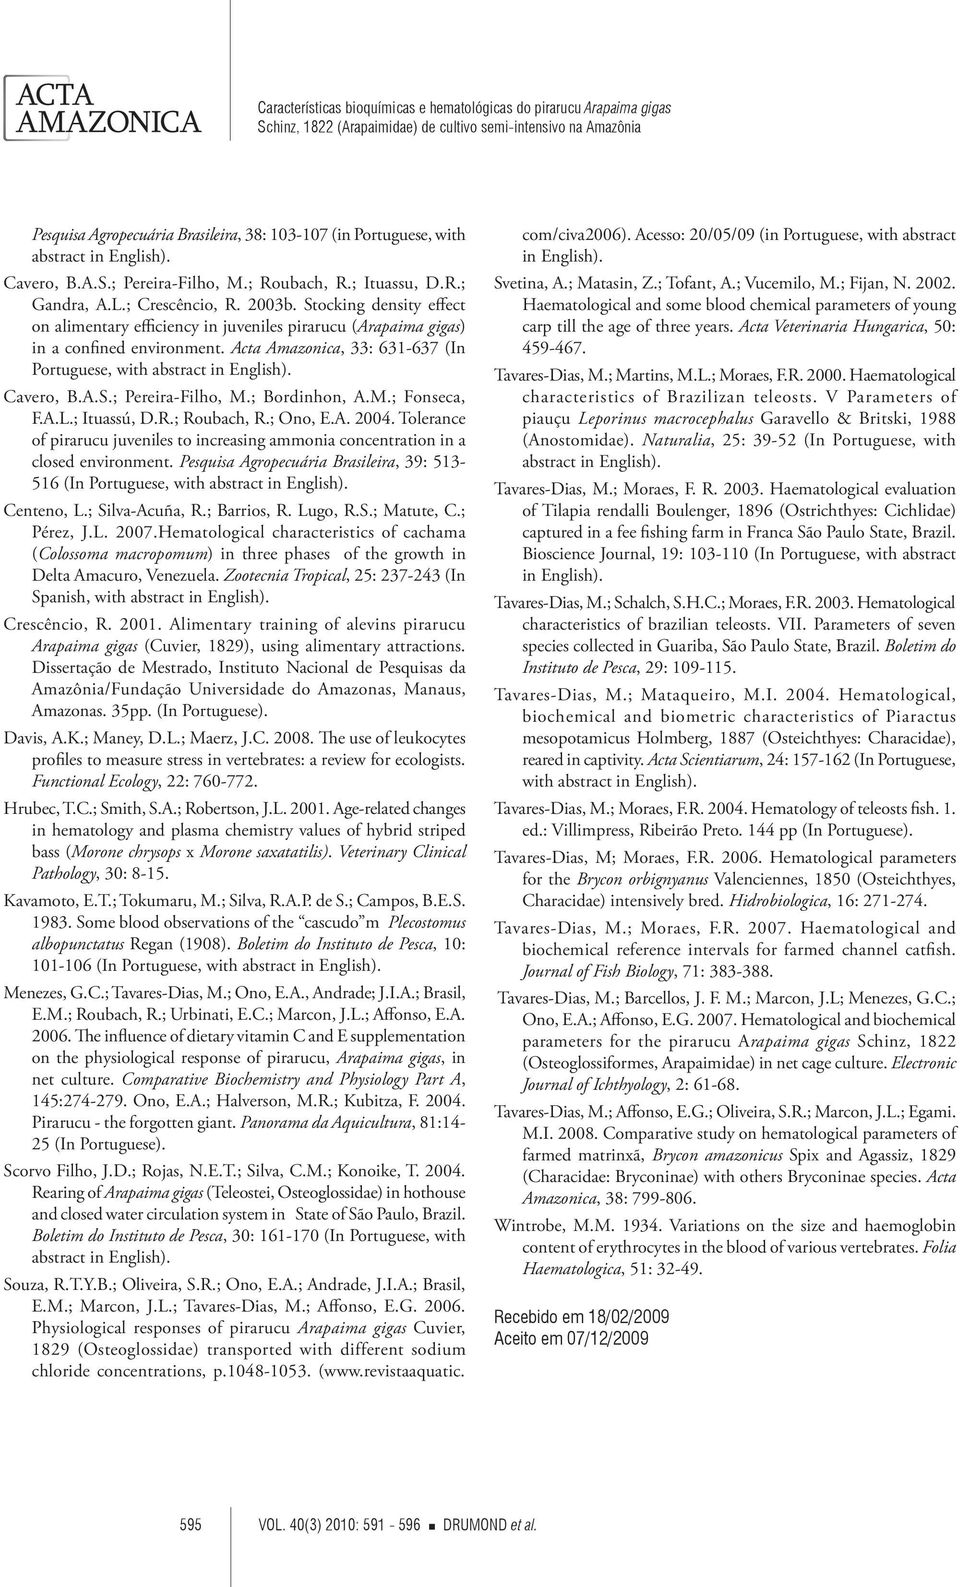 ; Bordinhon, A.M.; Fonseca, F.A.L.; Ituassú, D.R.; Roubach, R.; Ono, E.A. 2004. Tolerance of pirarucu juveniles to increasing ammonia concentration in a closed environment.